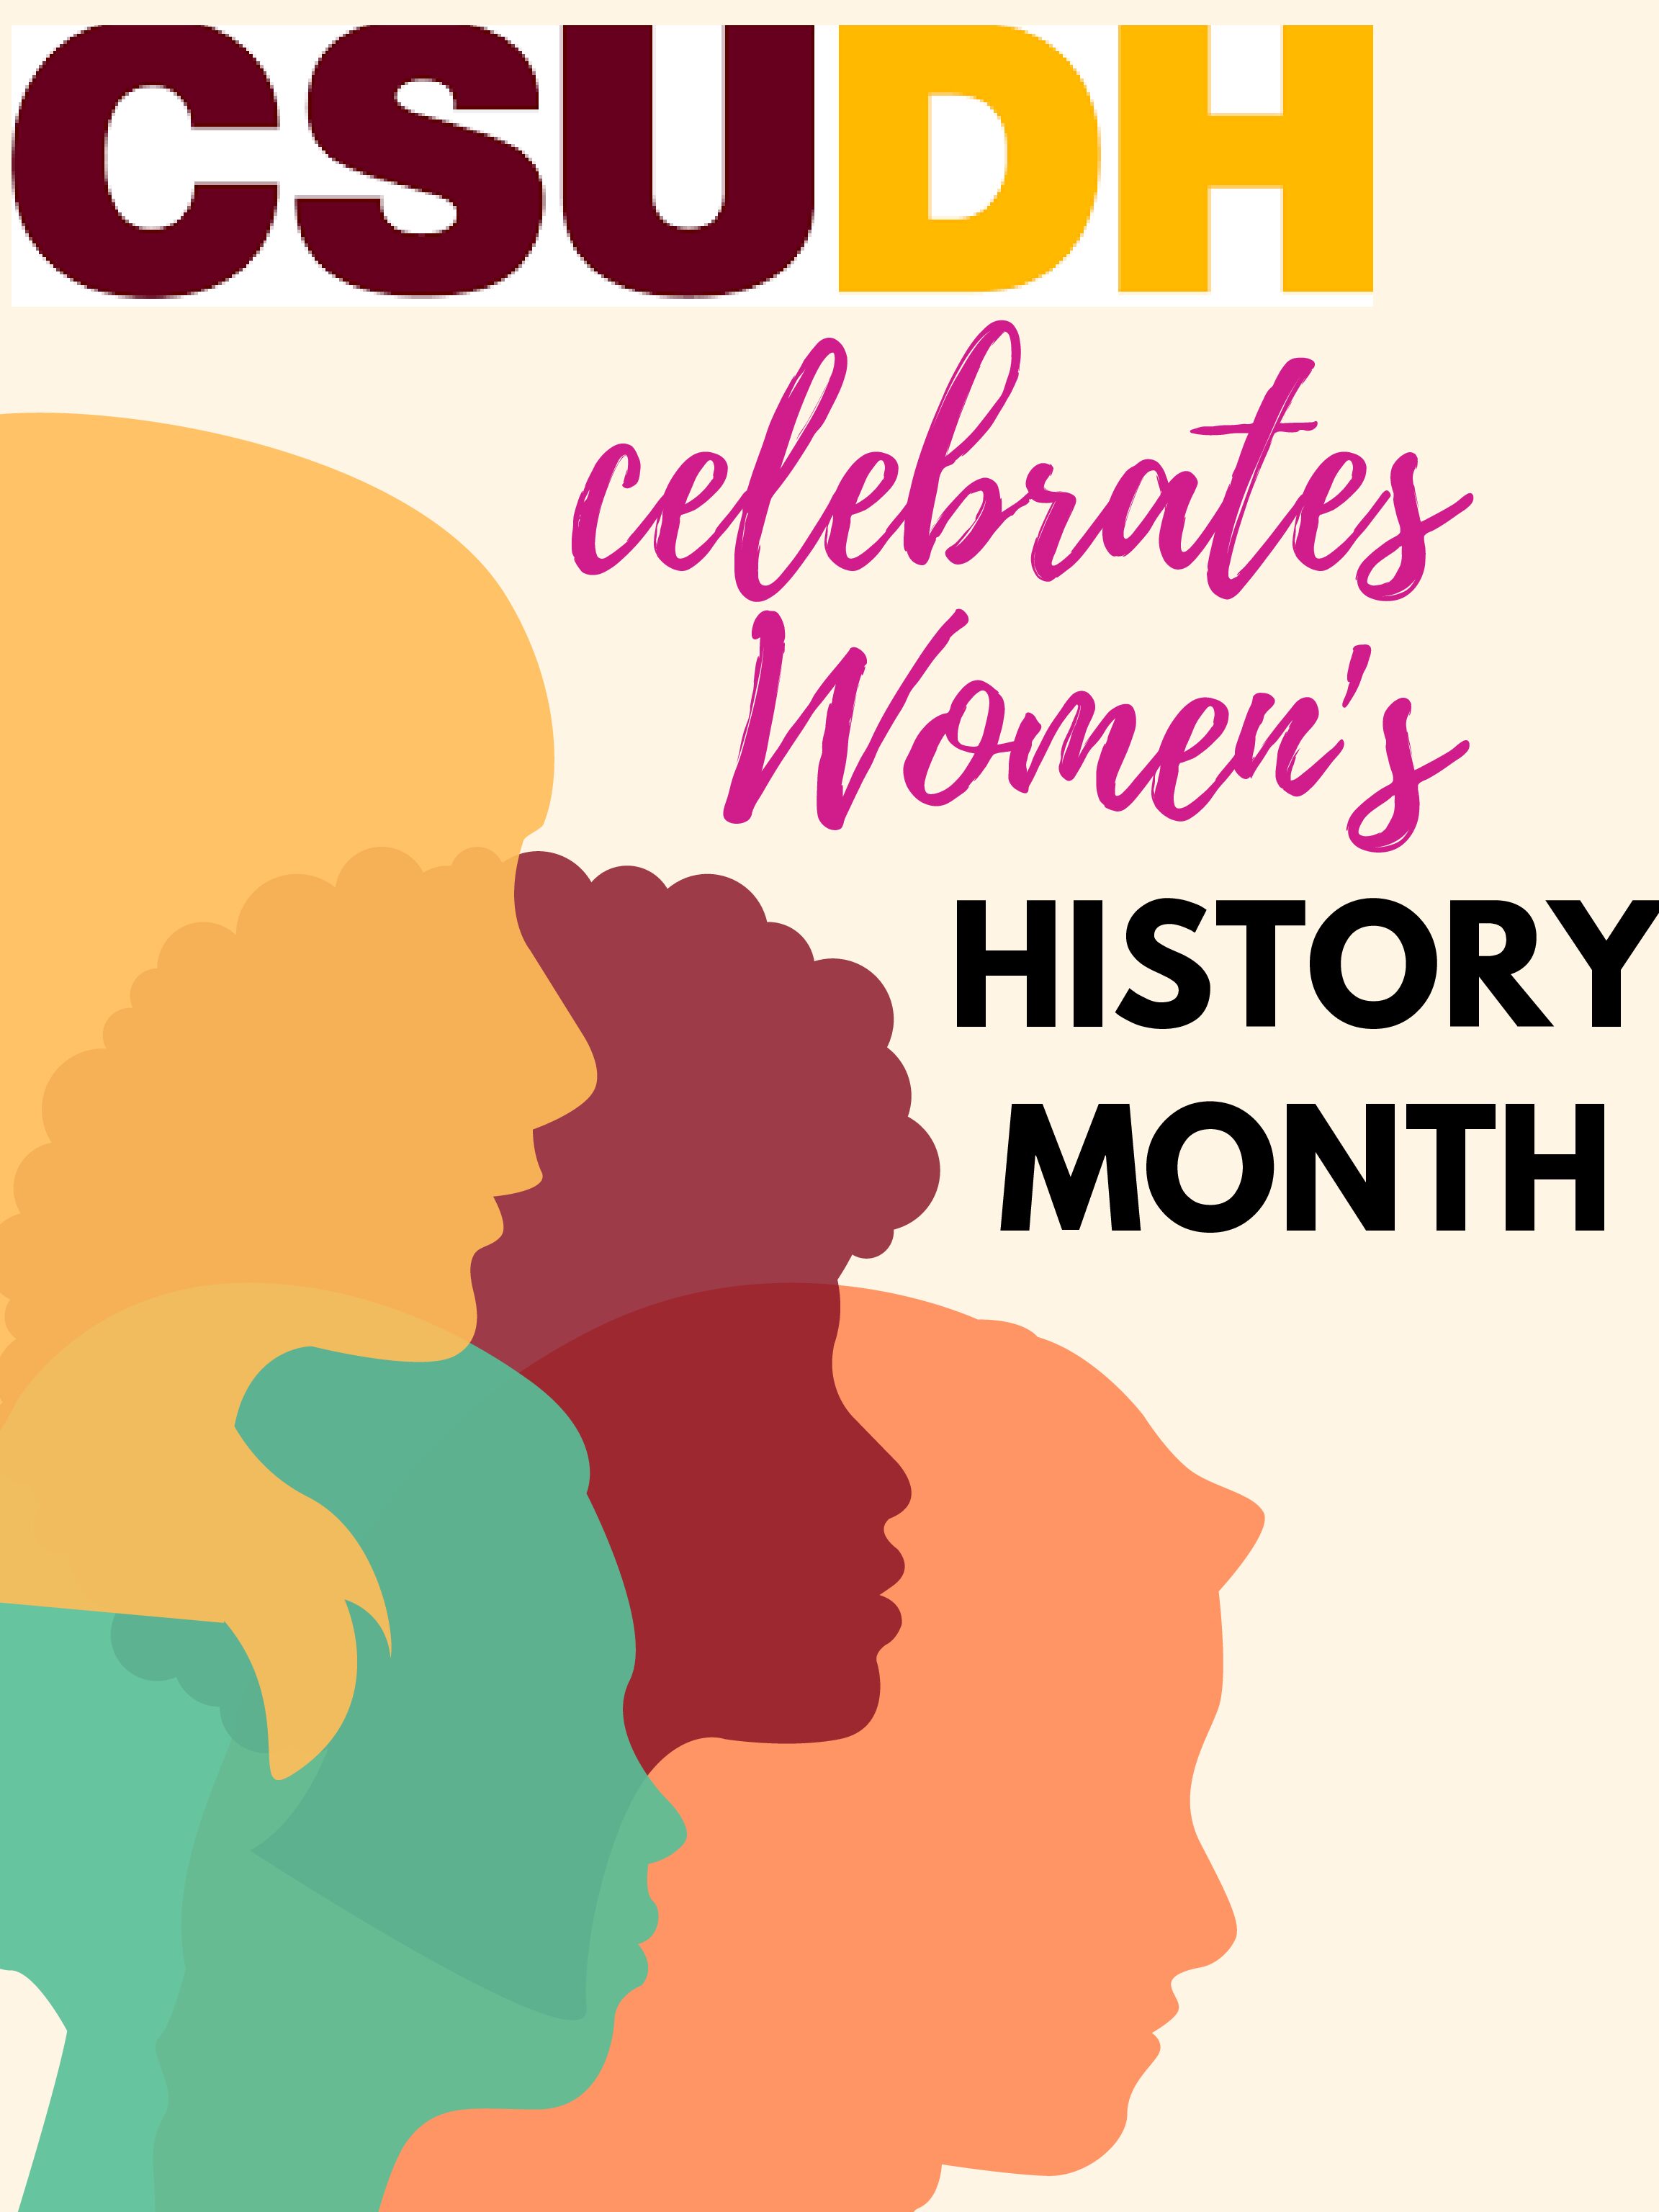 Celebrating Women’s History Month Toro Style